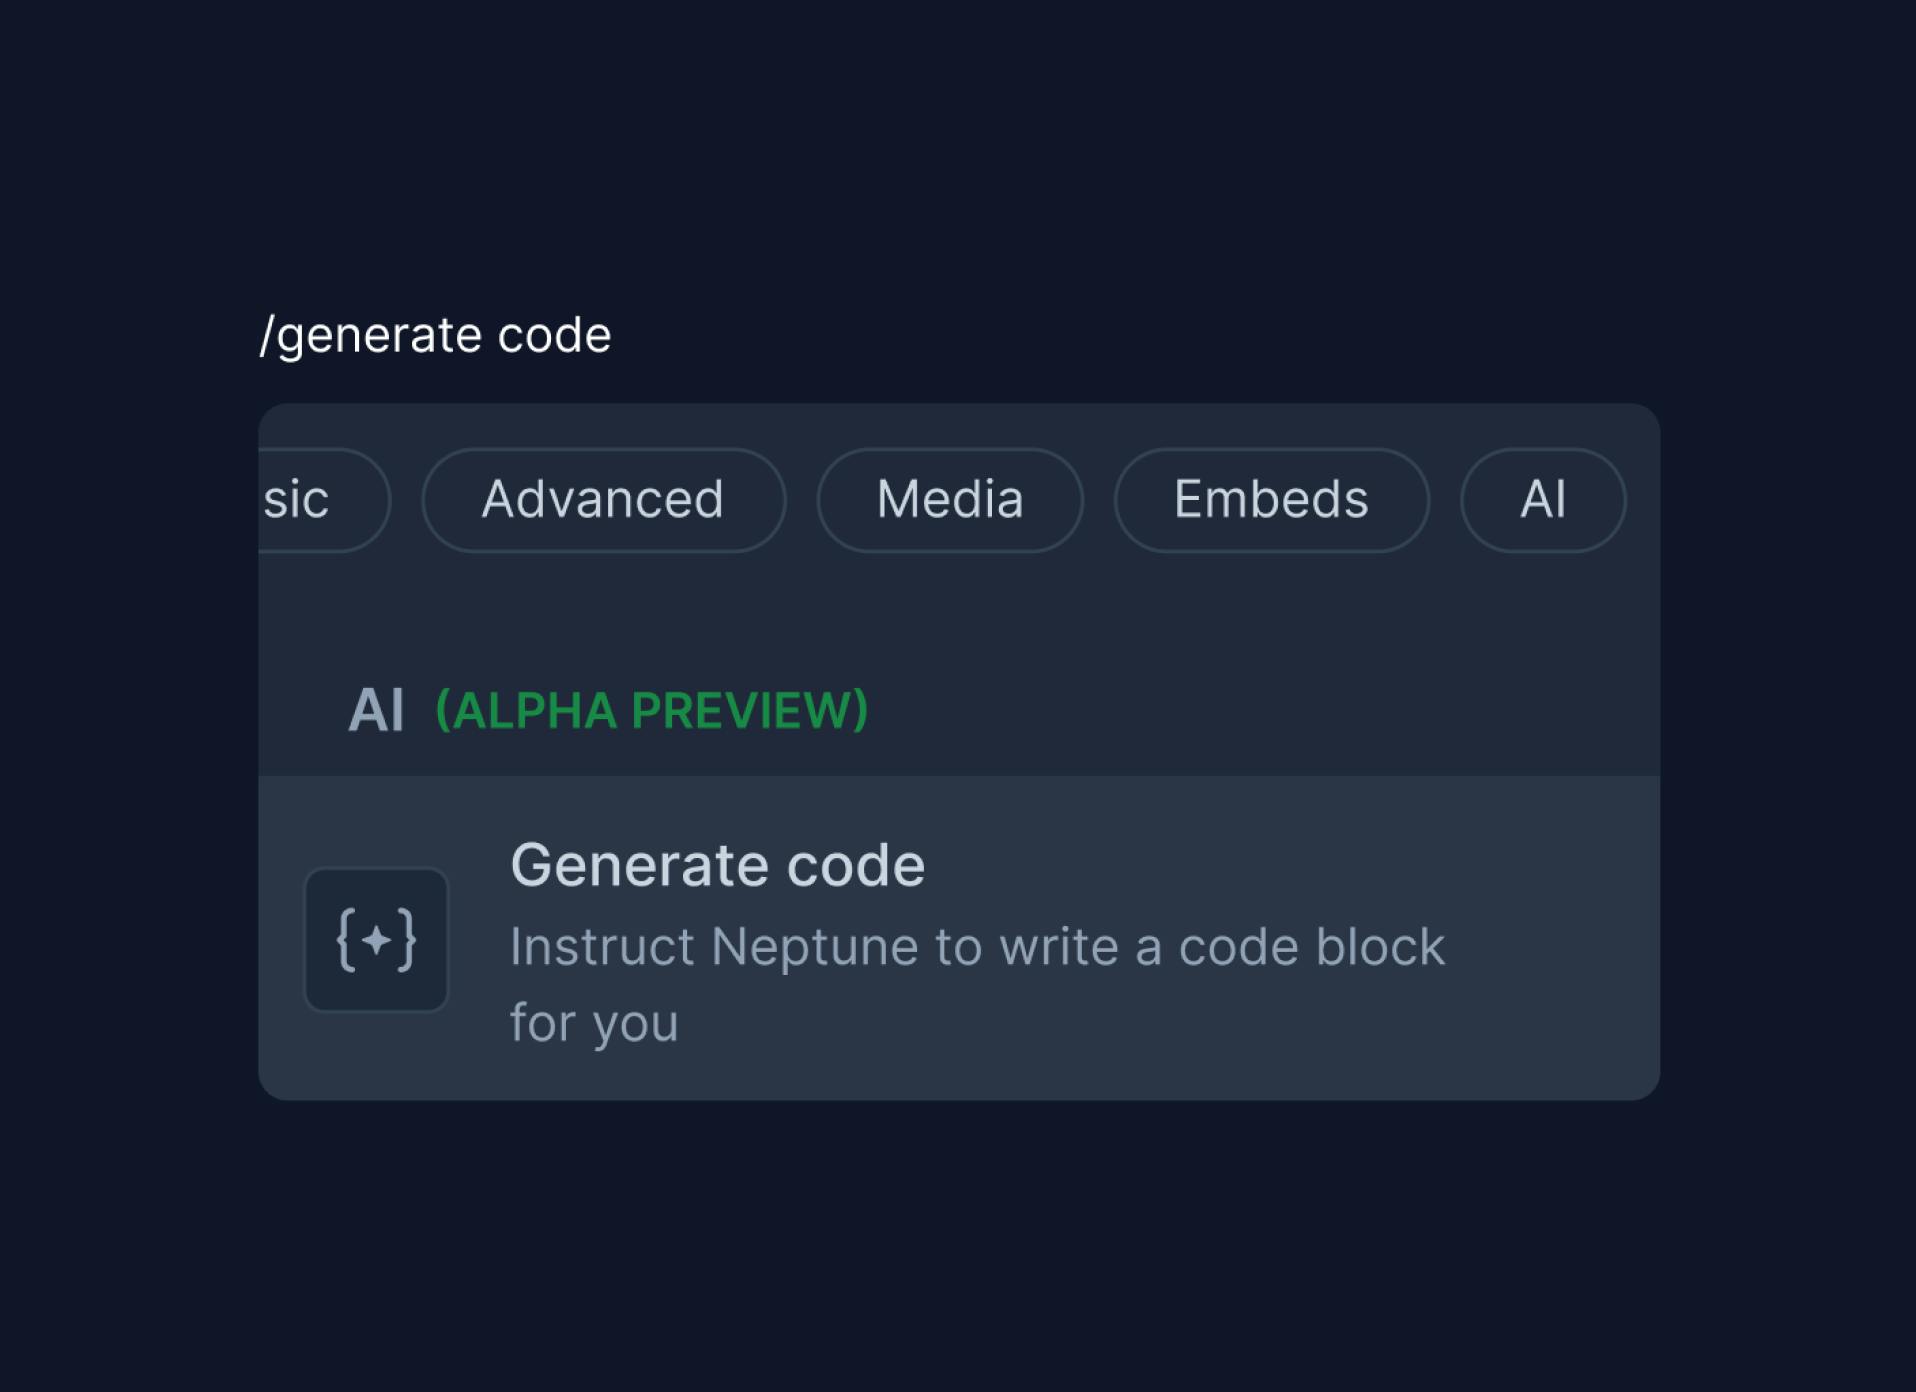 Generate code blocks